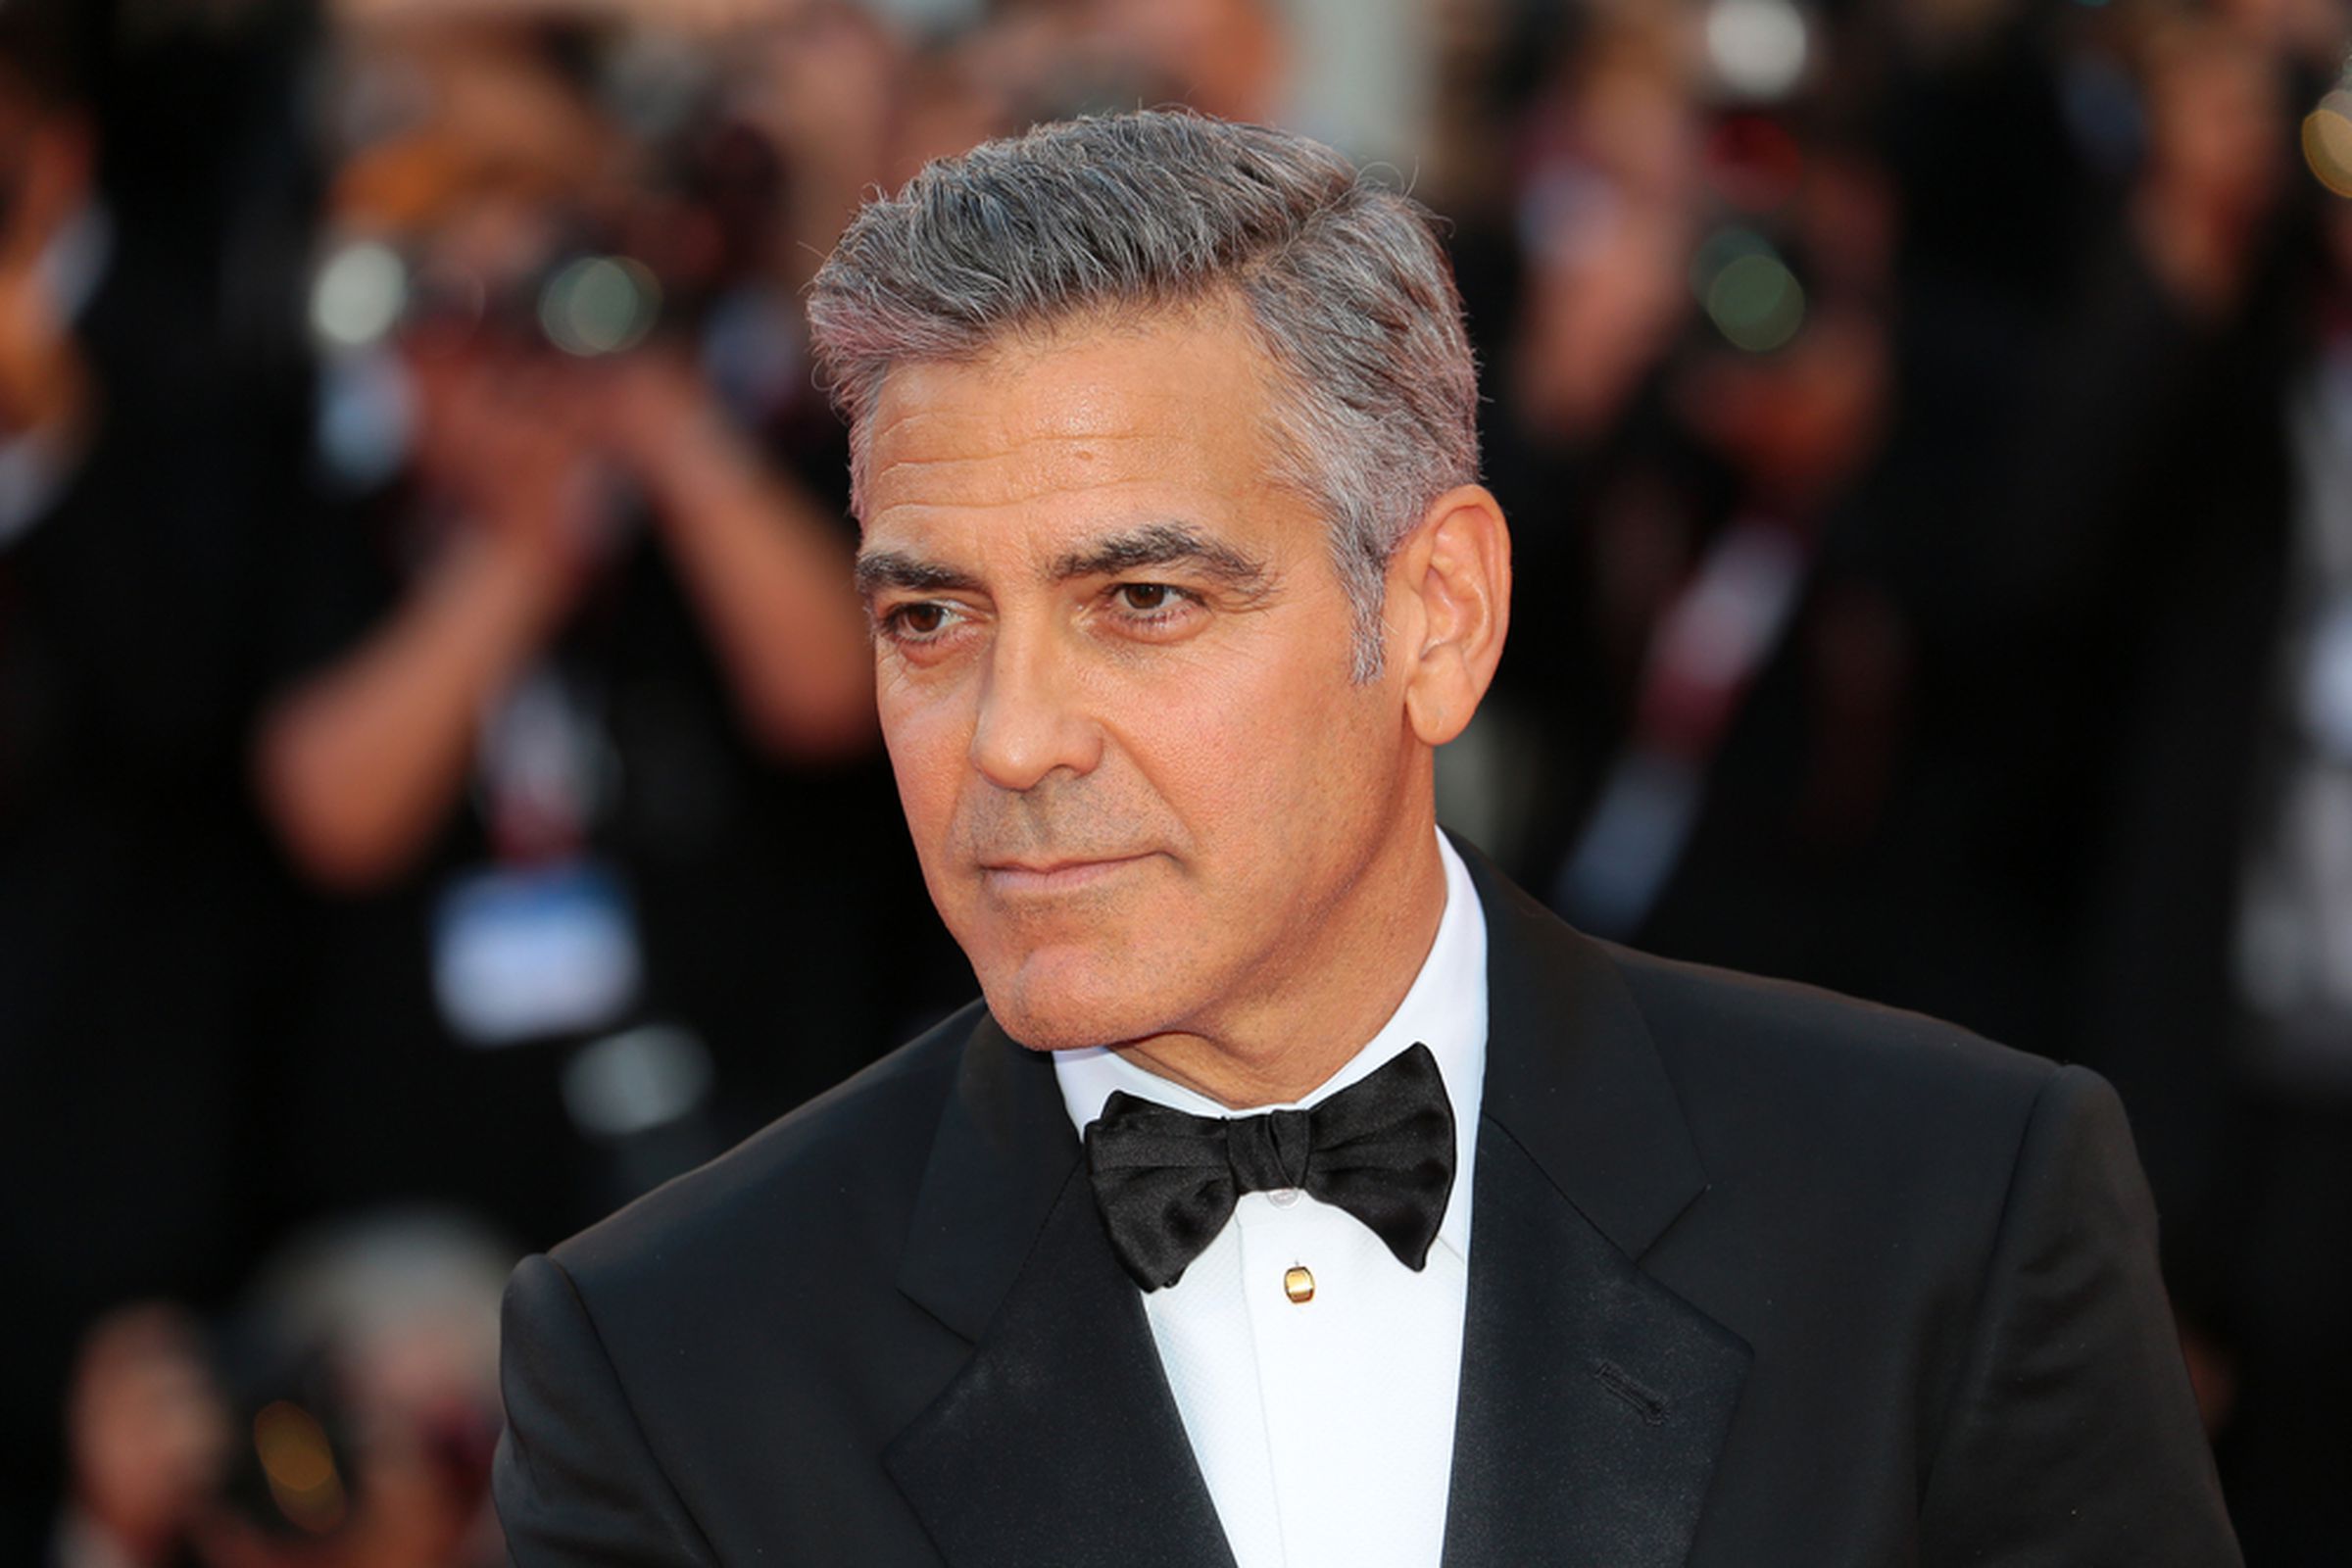 SHUTTERSTOCK George Clooney